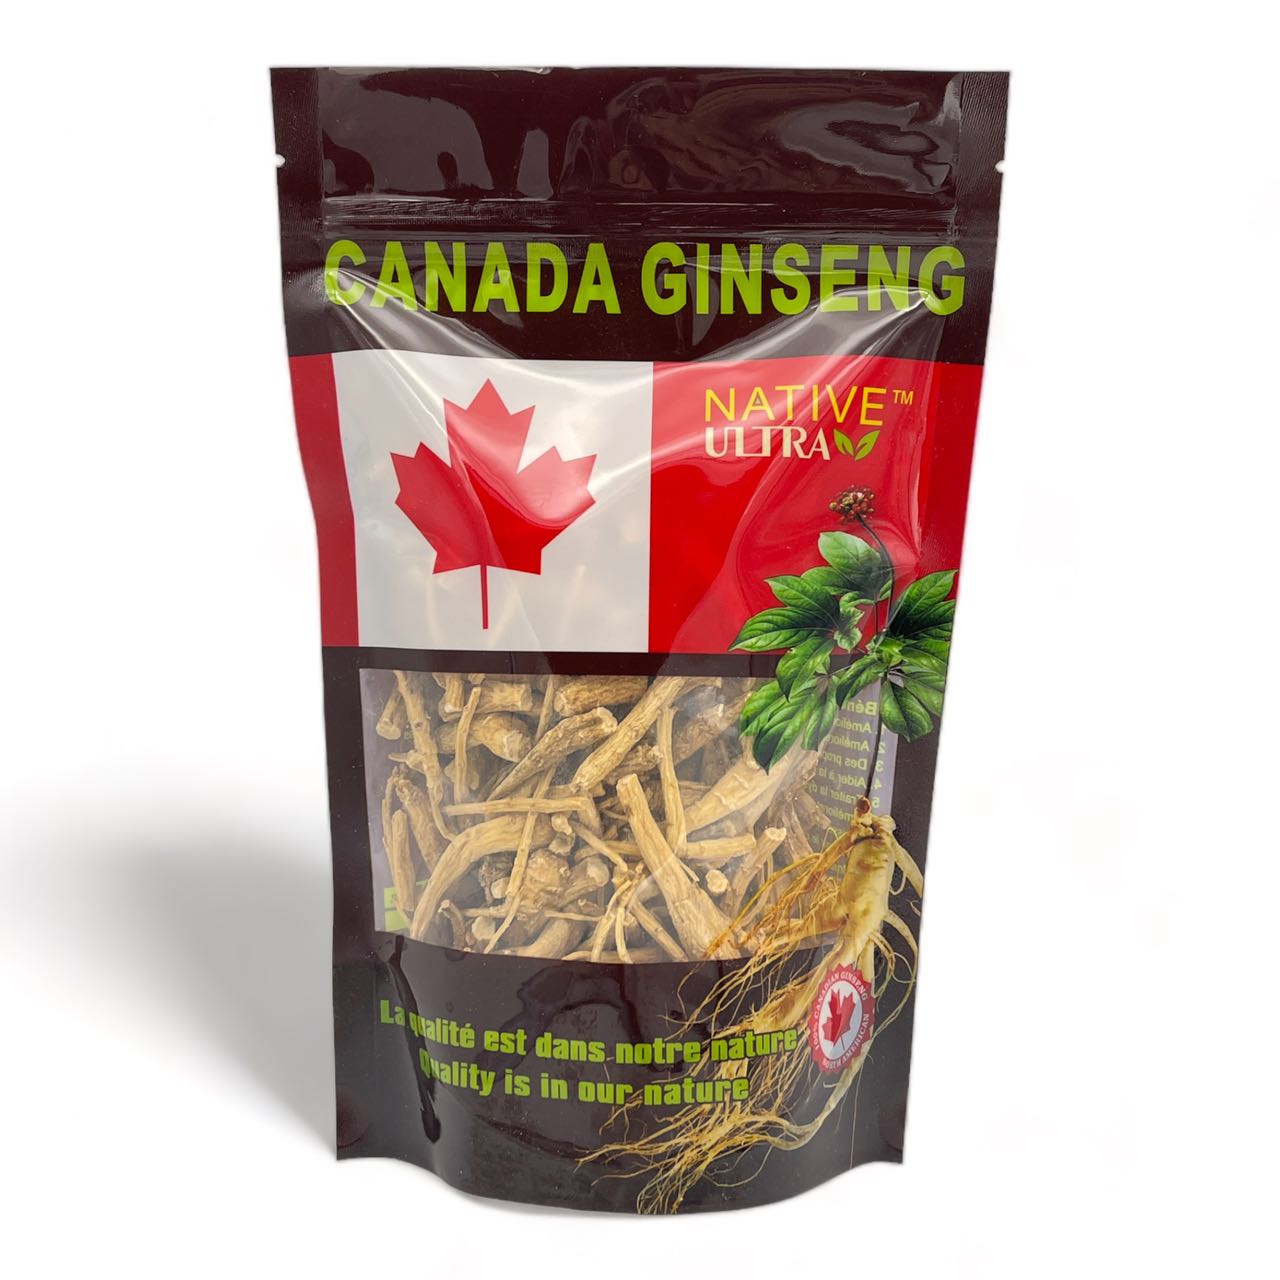 "NATIVE ULTRA" Branches de Ginseng Américain Canadien, 227g/sachet